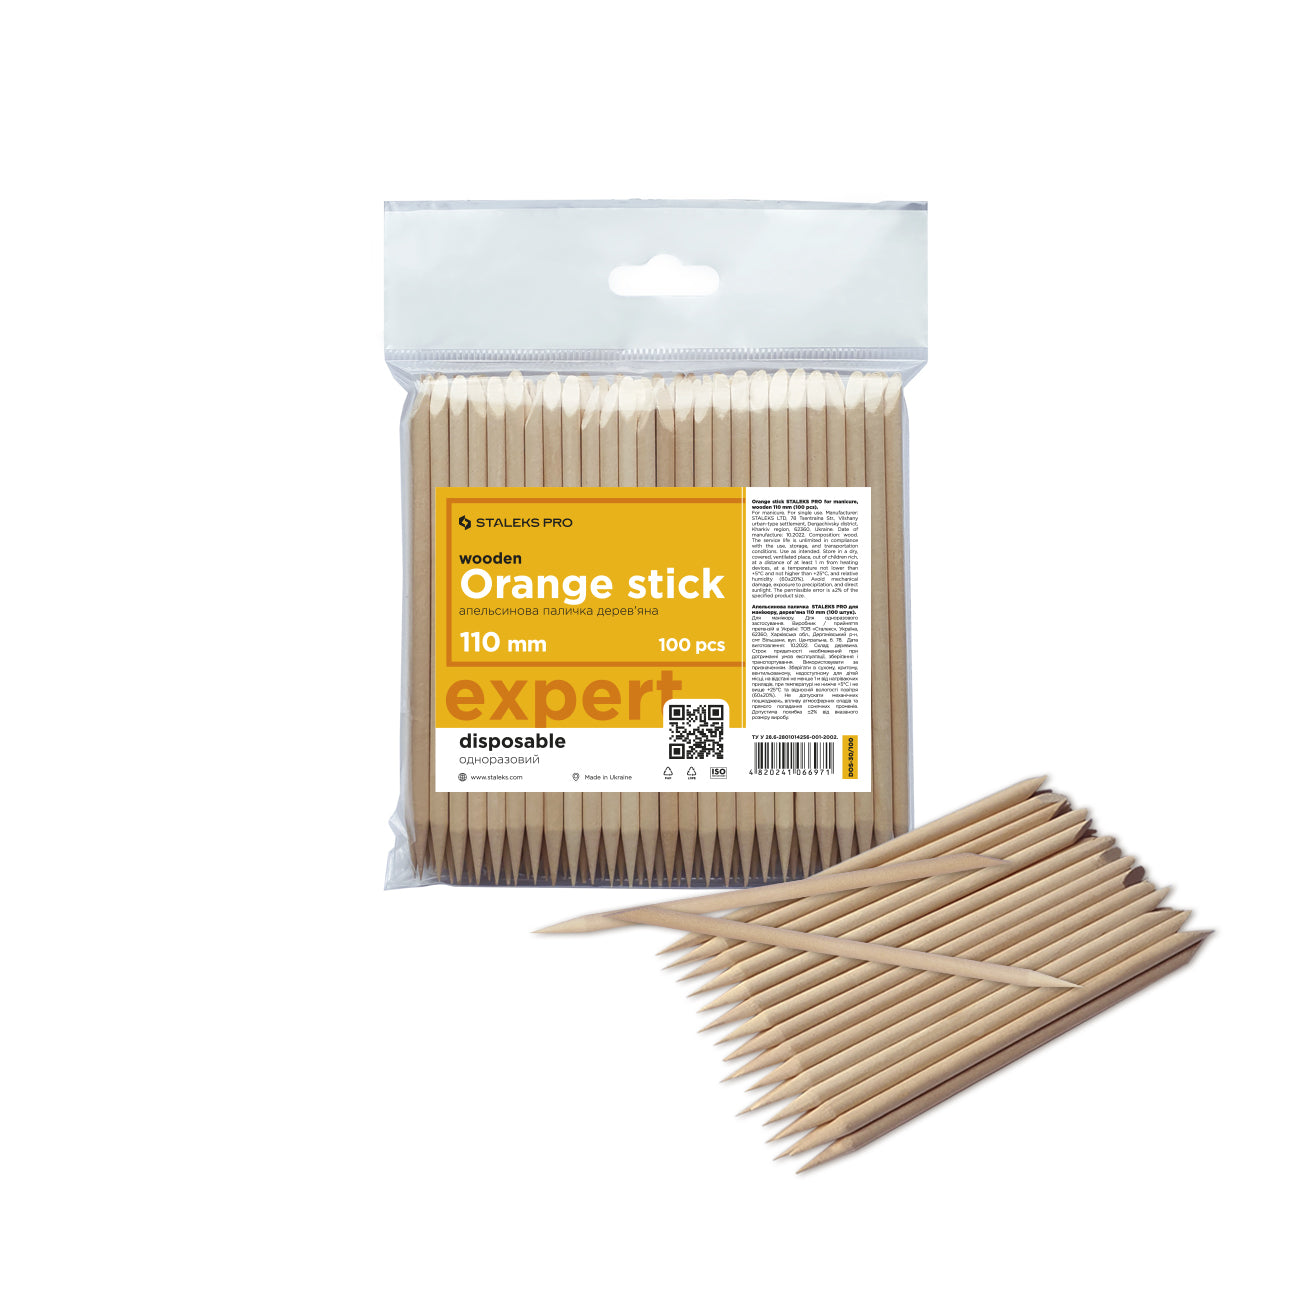 Orange wood stick STALEKS PRO for manicure, wooden 110 mm (100 pcs)